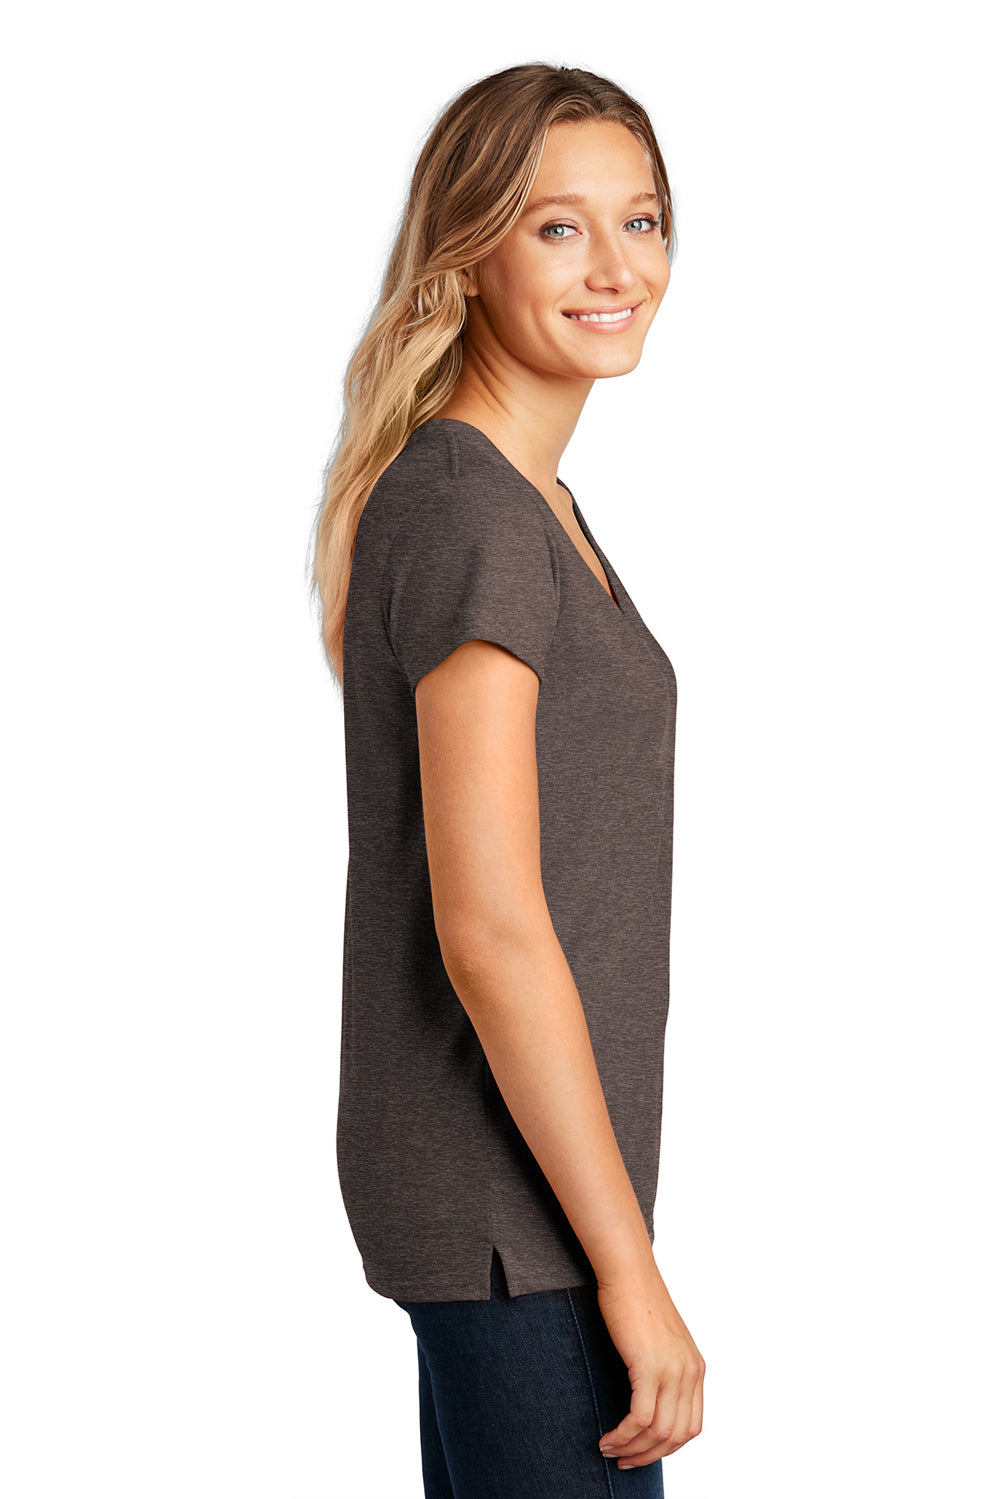 District Womens Re-Tee Short Sleeve V-Neck T-Shirt Heather Deep Brown Side